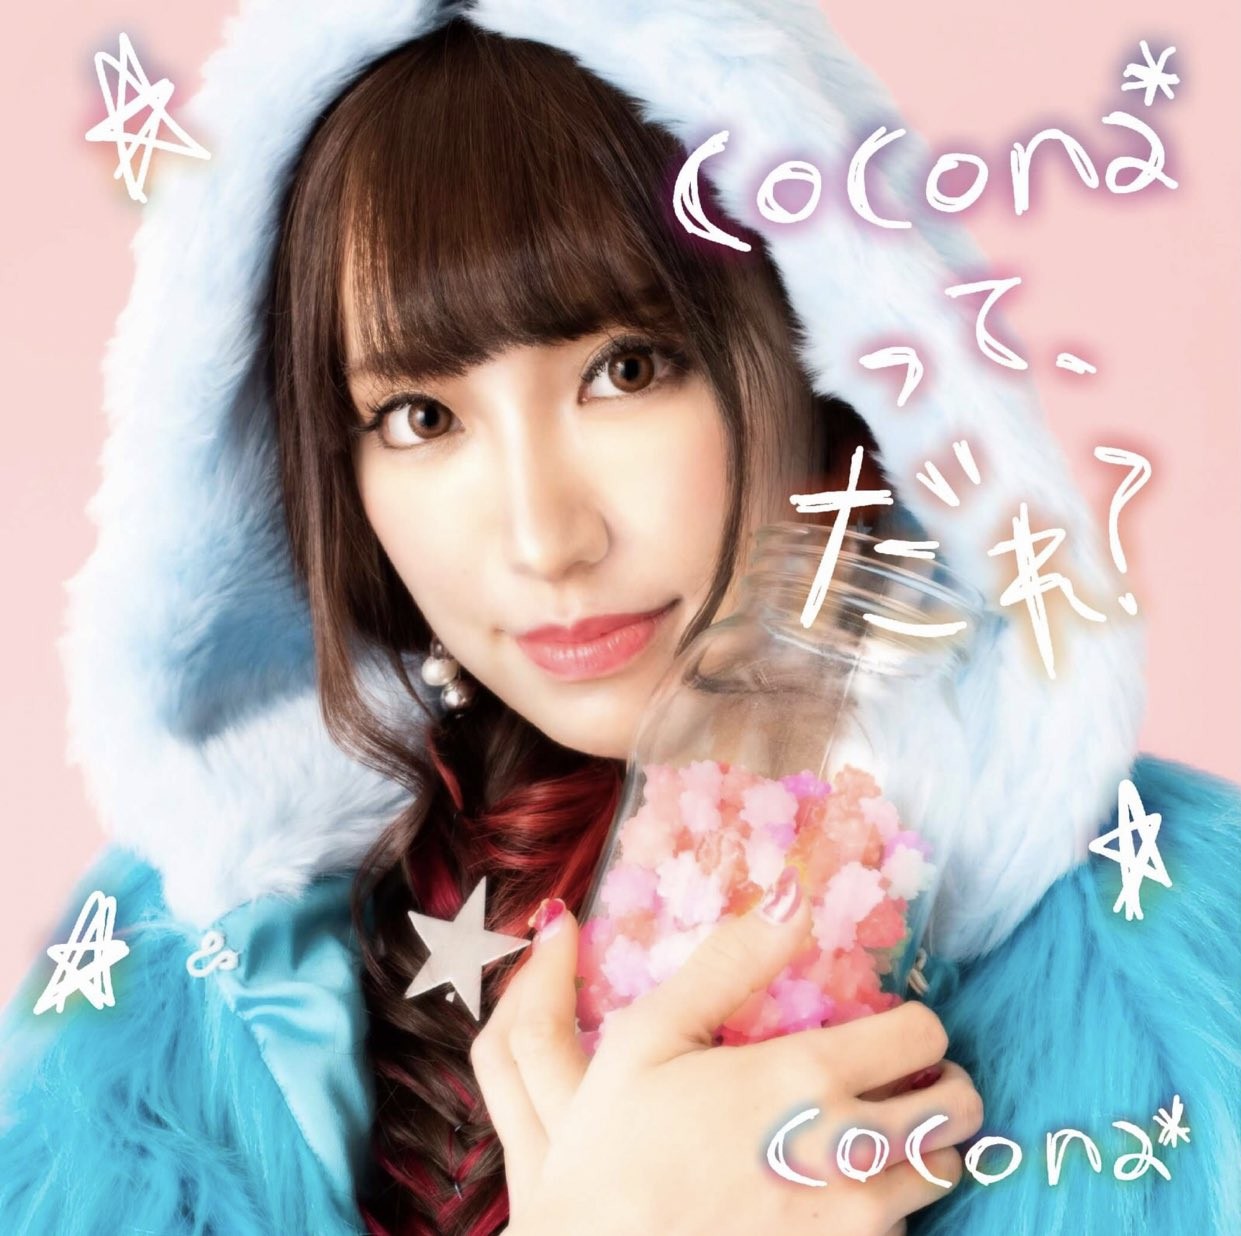 cocona* – cocona*って、だれ？ [FLAC / CD] [2019.02.13]